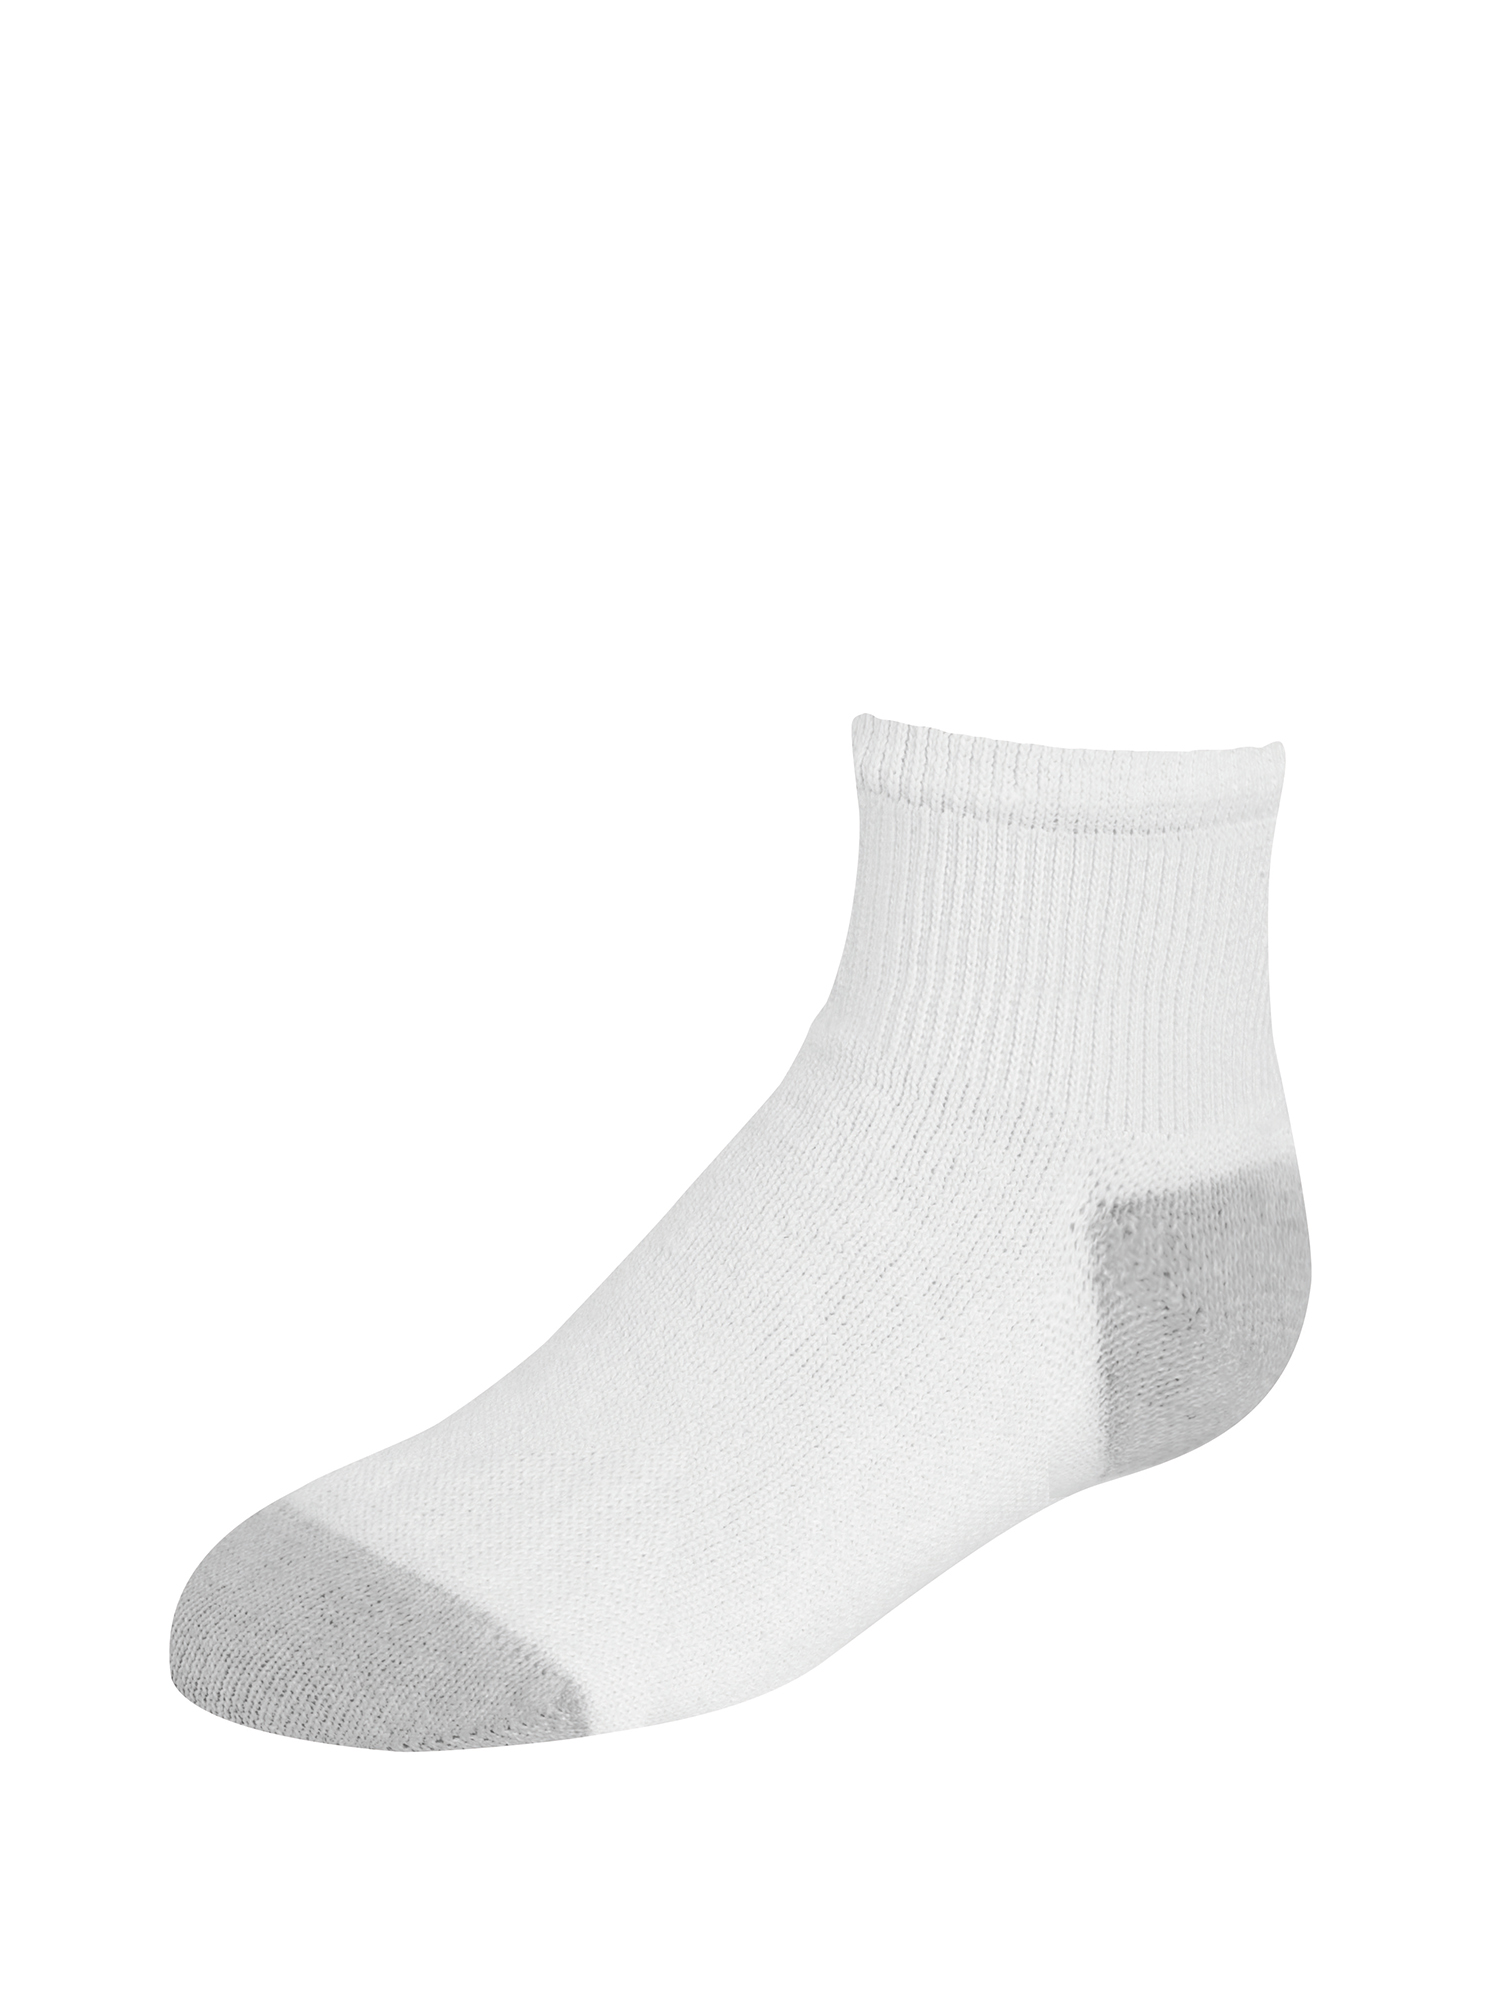 Hanes Boys Socks, 10 Pack Ankle, Sizes S - L - image 4 of 4